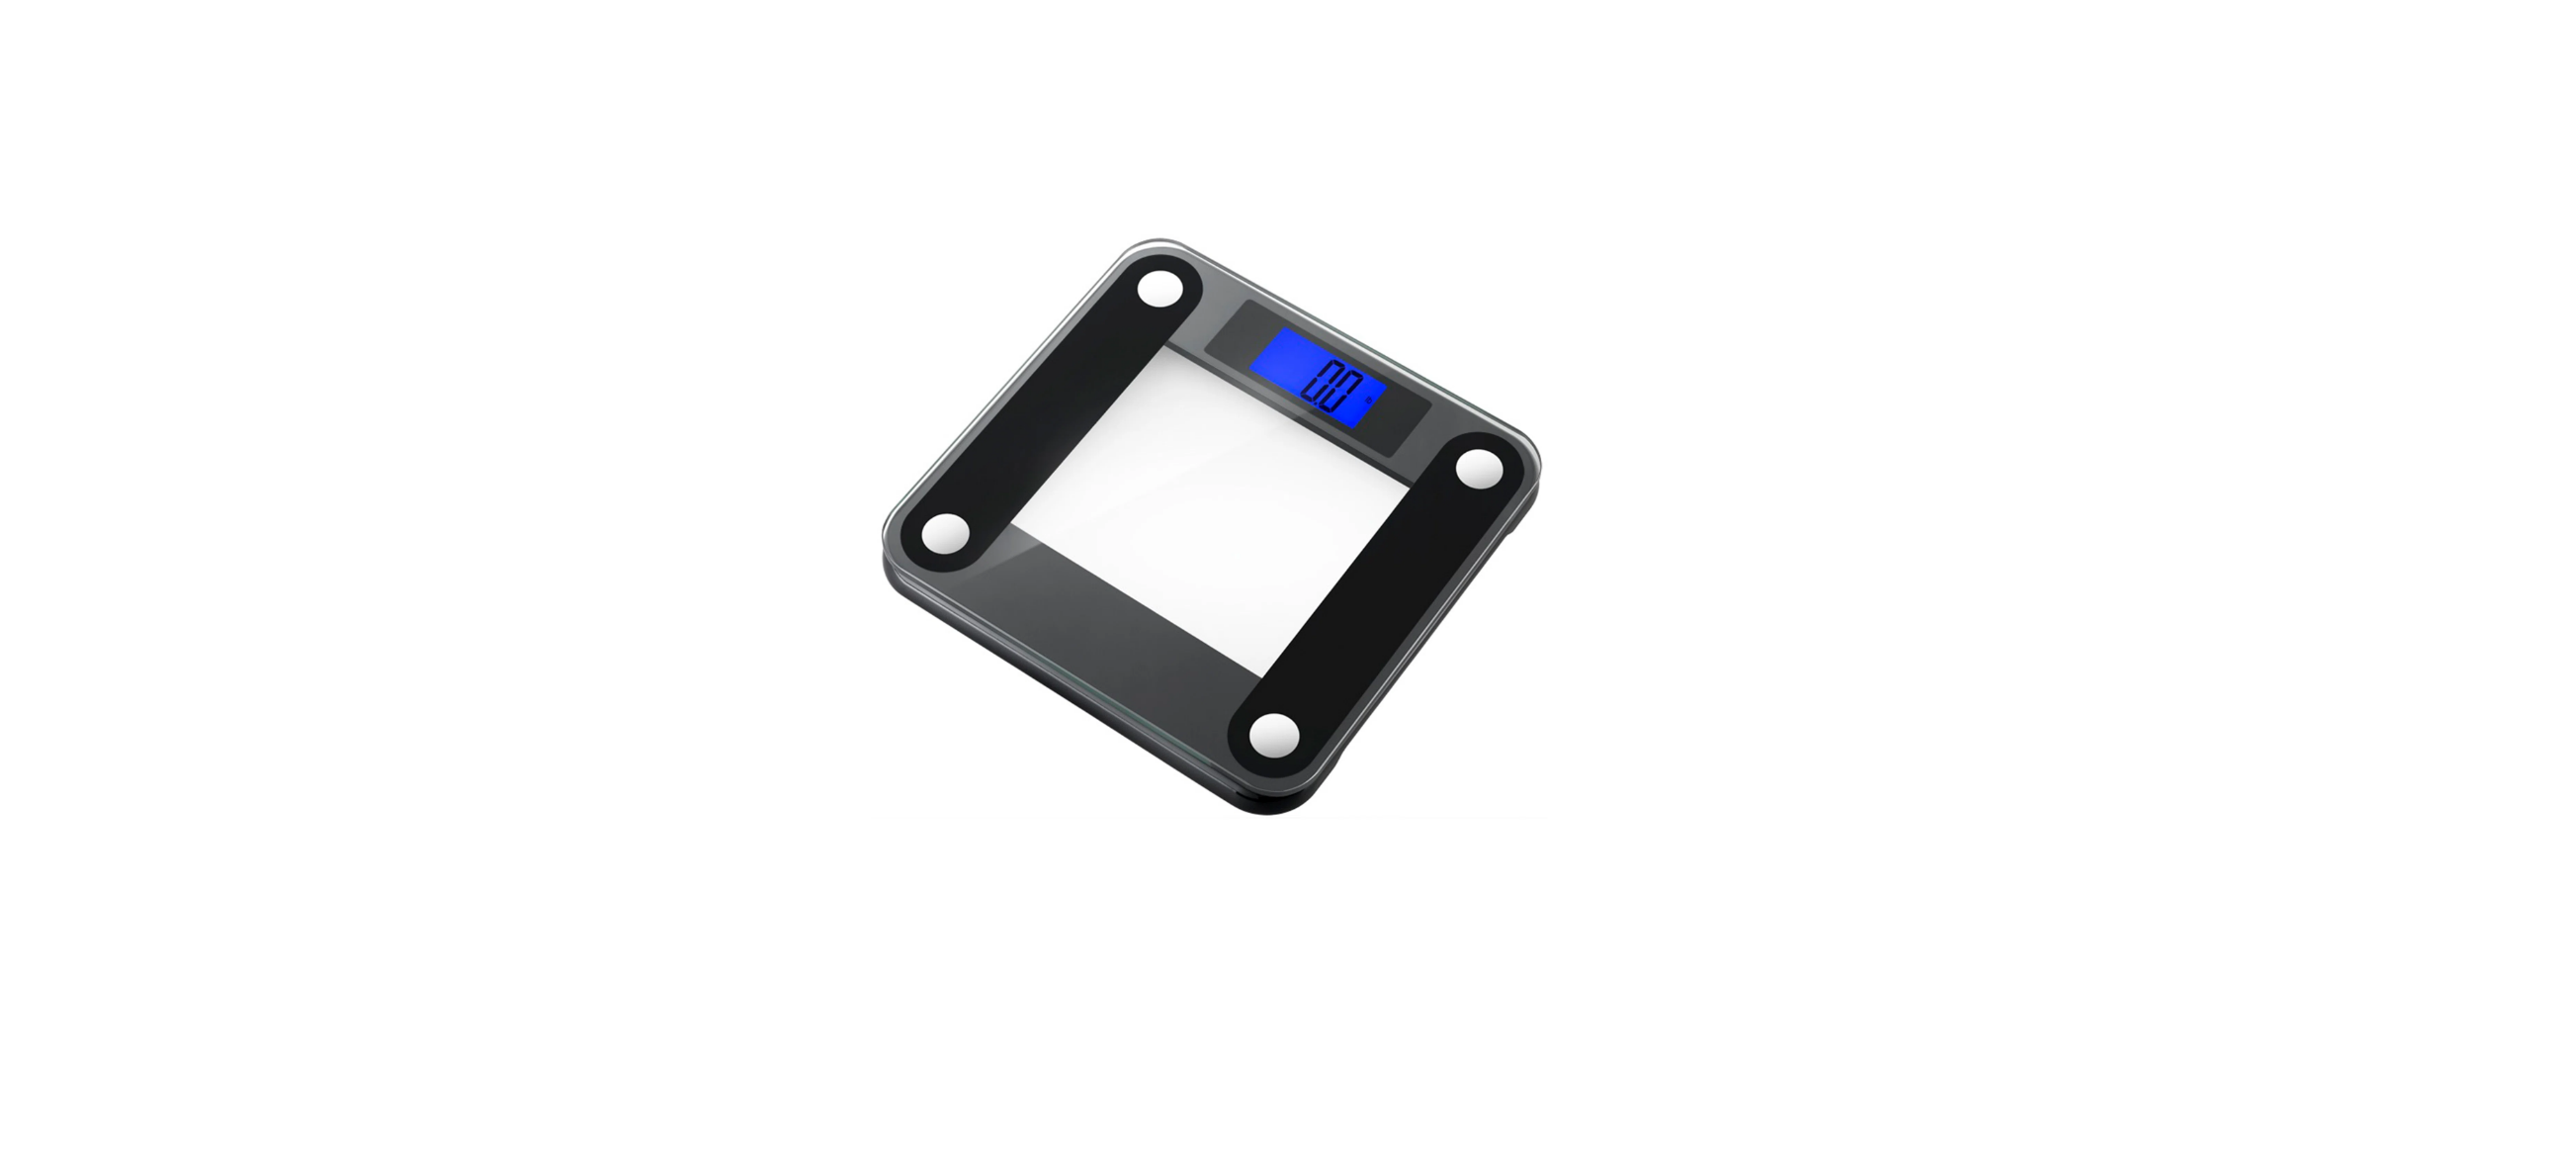 Ozeri Precision II Digital Bathroom Scale (440 lbs Capacity), with Weight Change